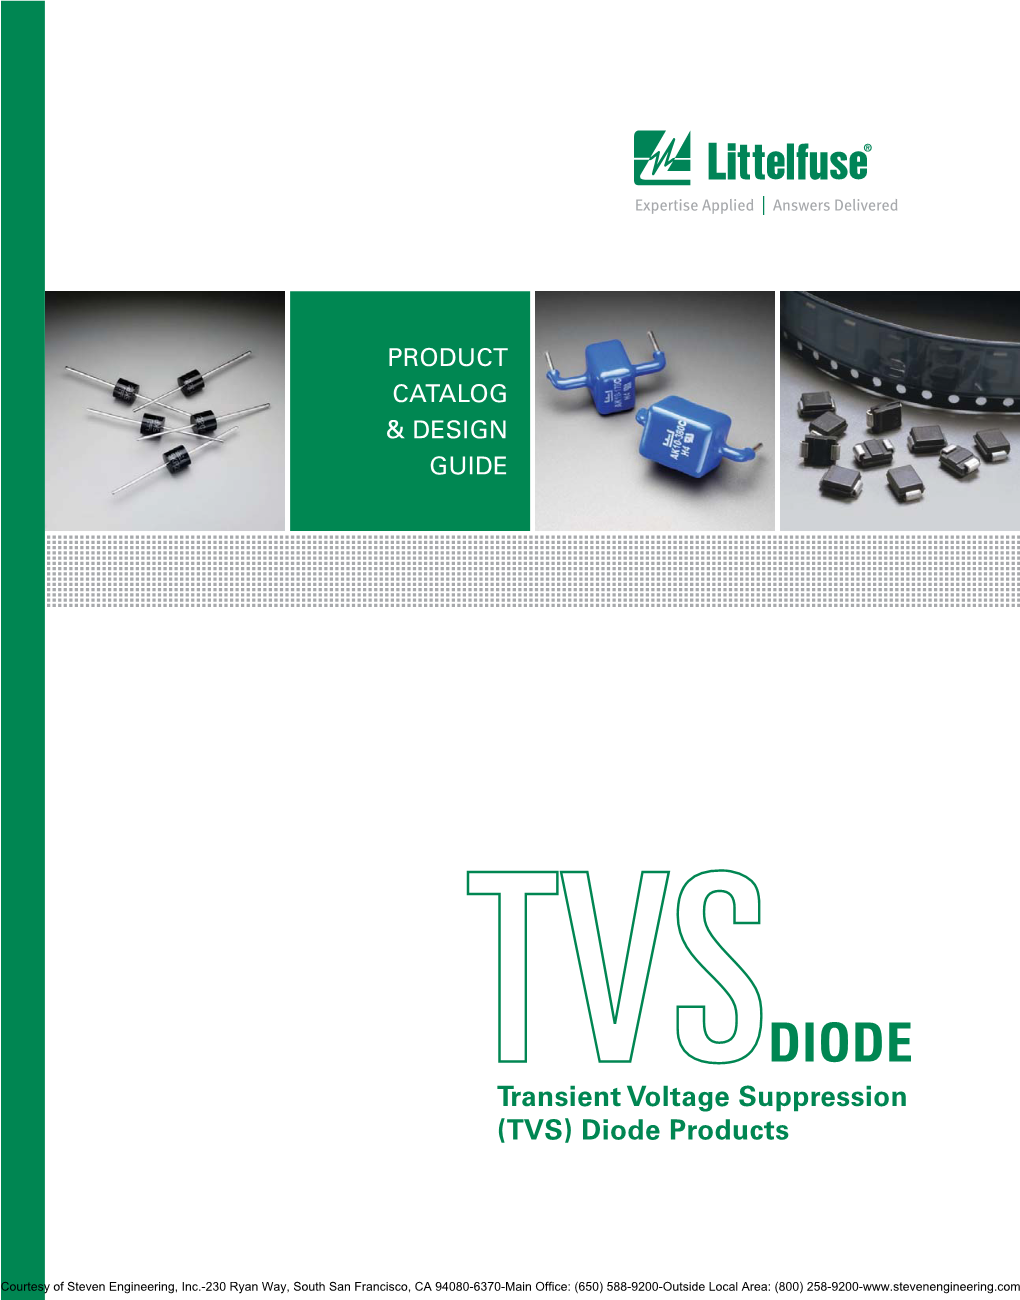 Transient Voltage Suppression (TVS) Diode Products